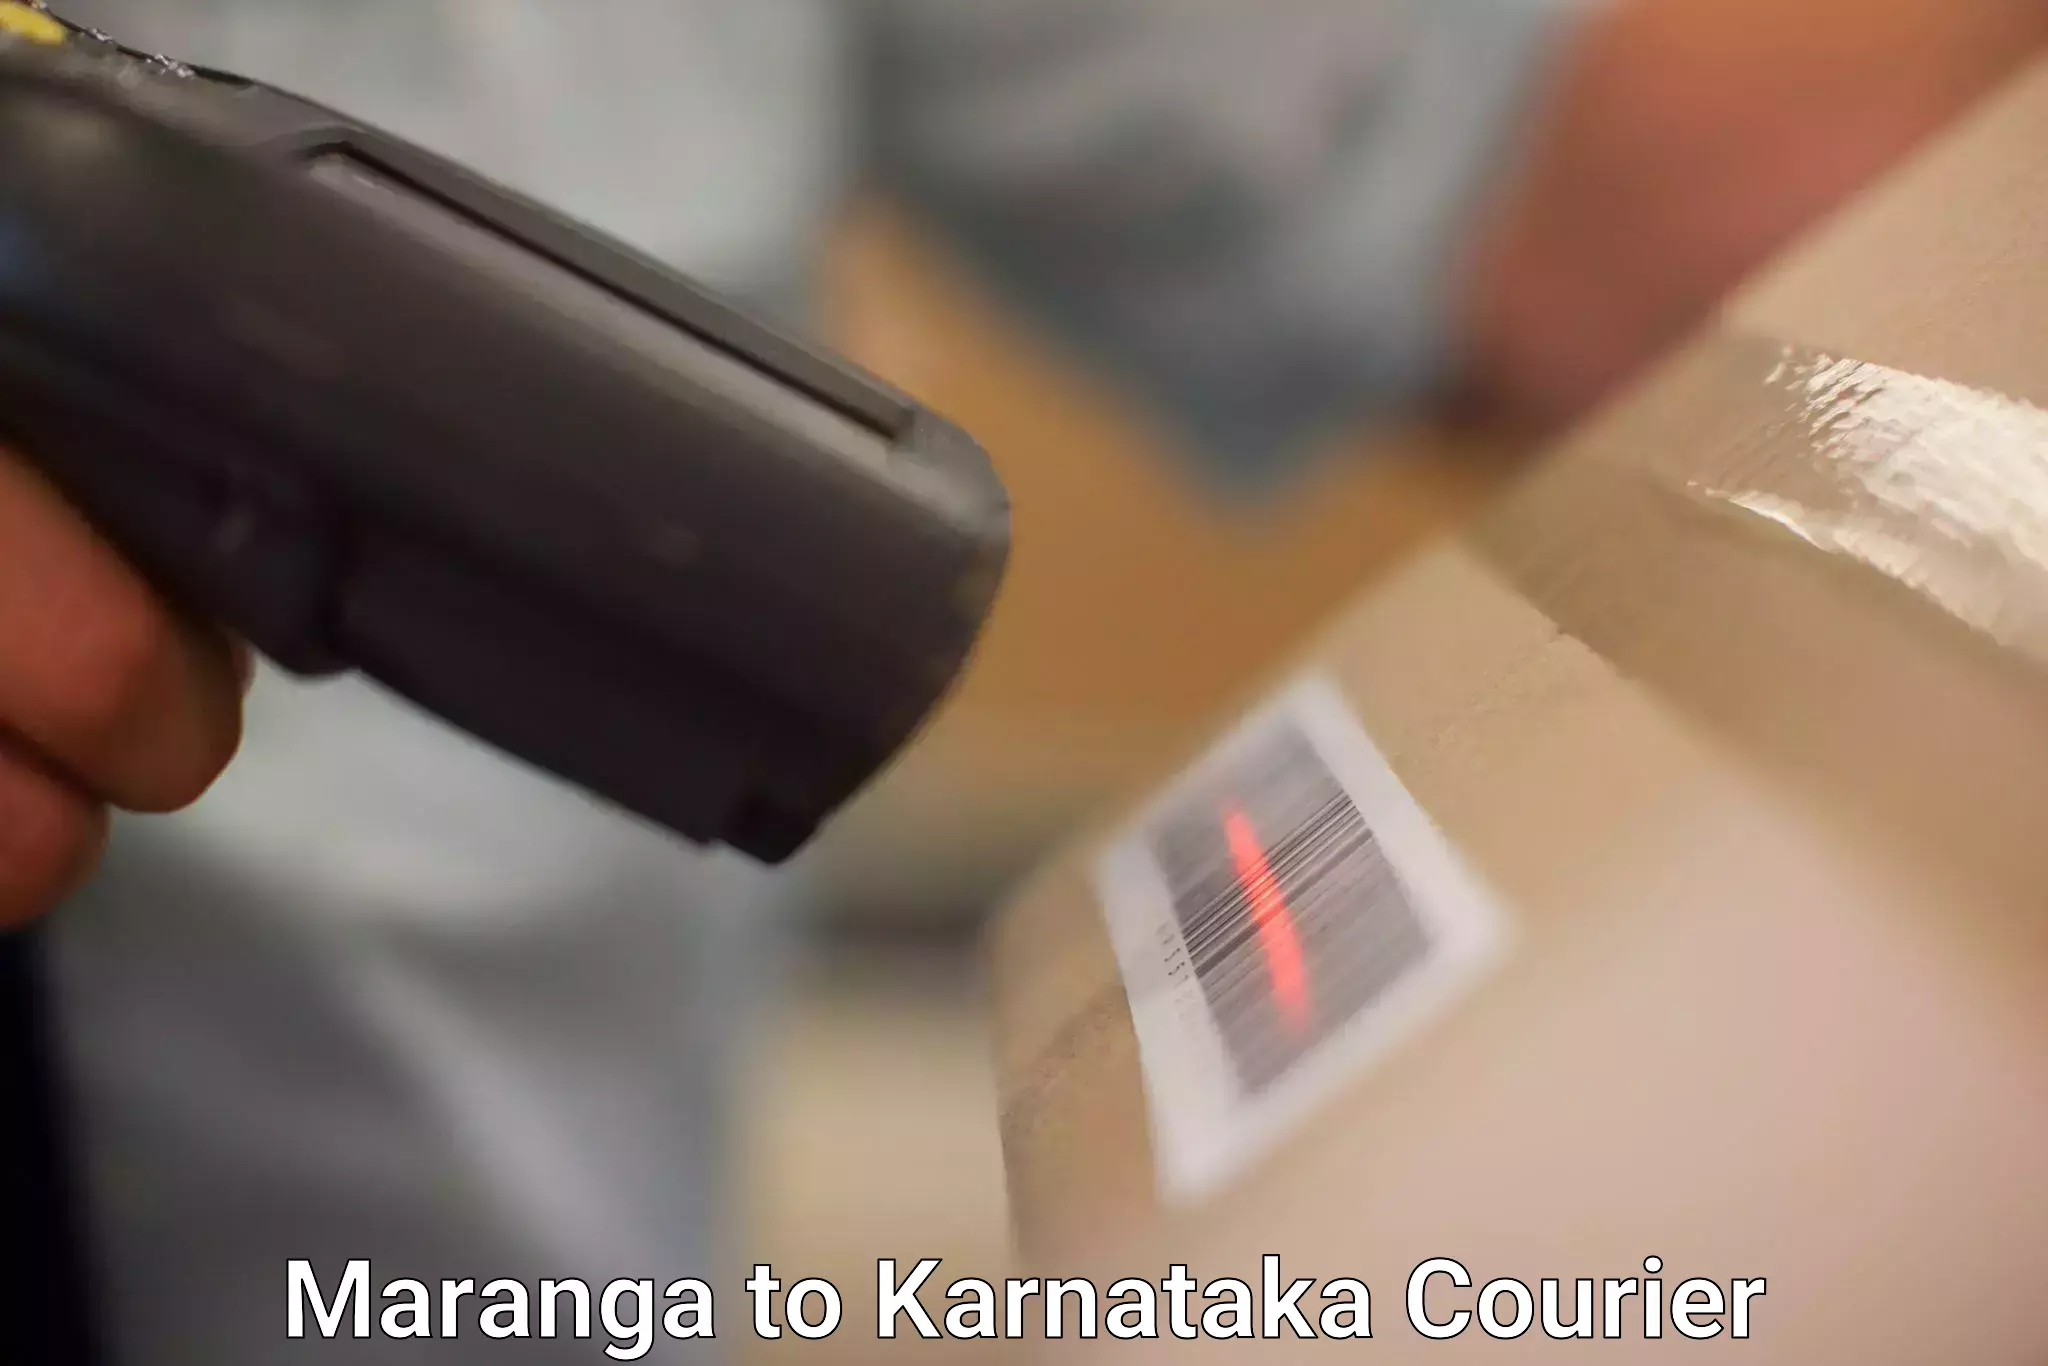 Logistics and distribution Maranga to Karnataka